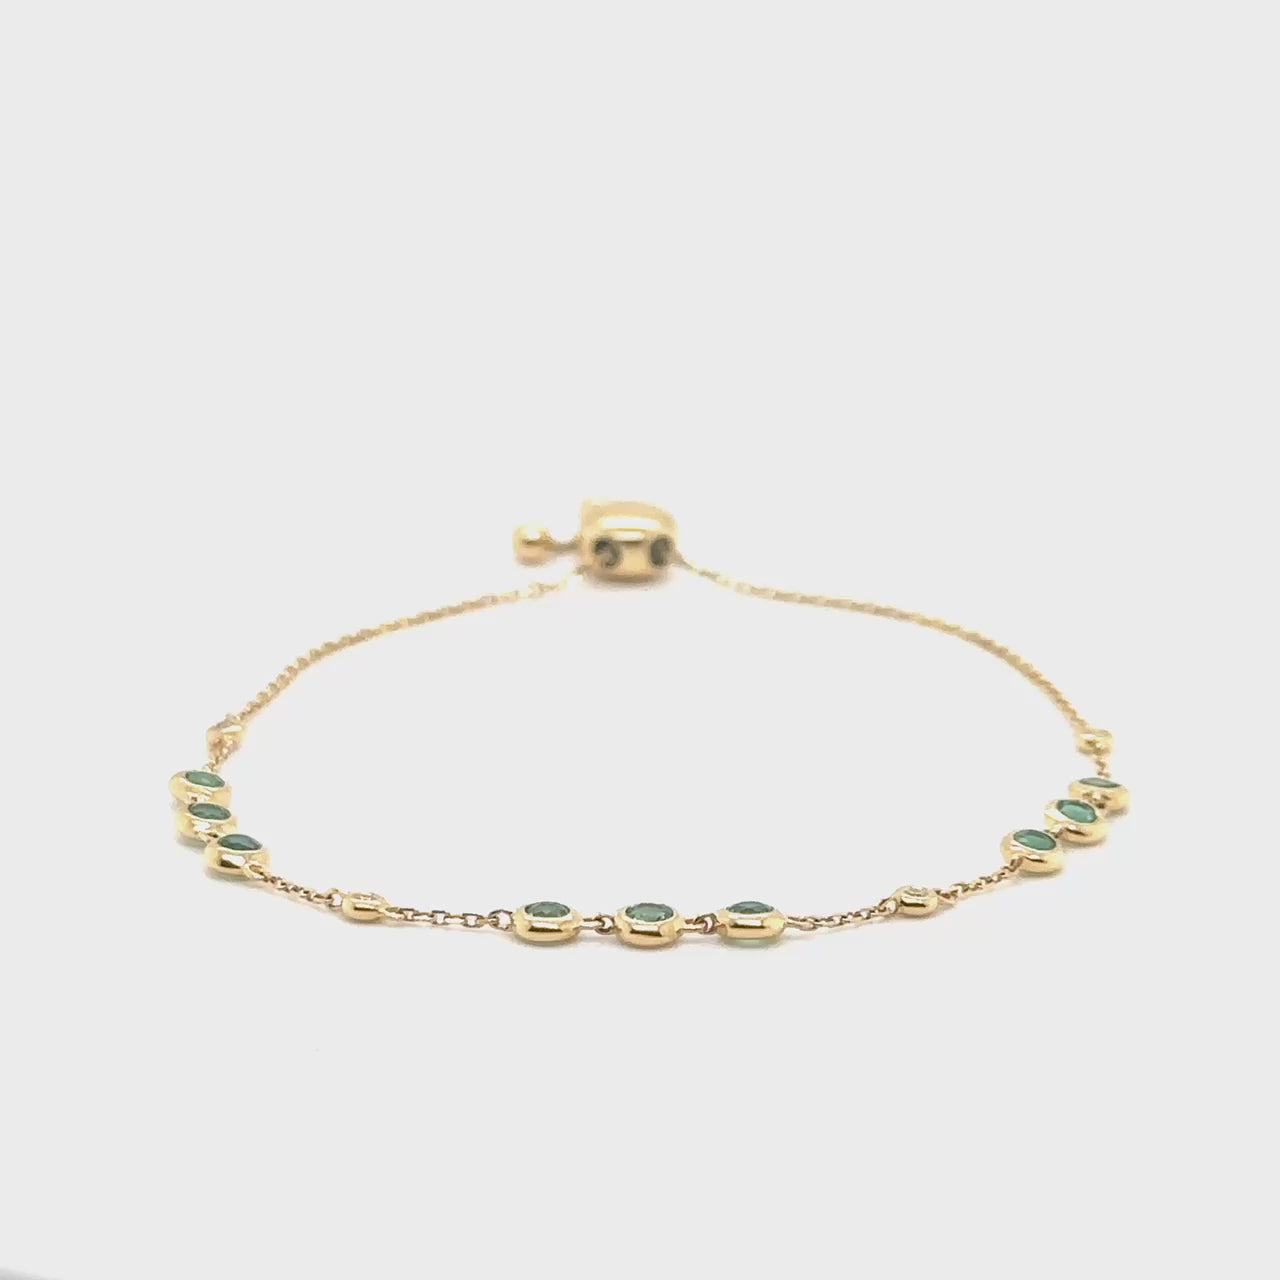 A luxurious, round emerald and diamond bracelet, showcasing exquisite craftsmanship, elegant emeralds glistening alongside brilliant diamonds, a timeless accessory capturing sophistication and grace.